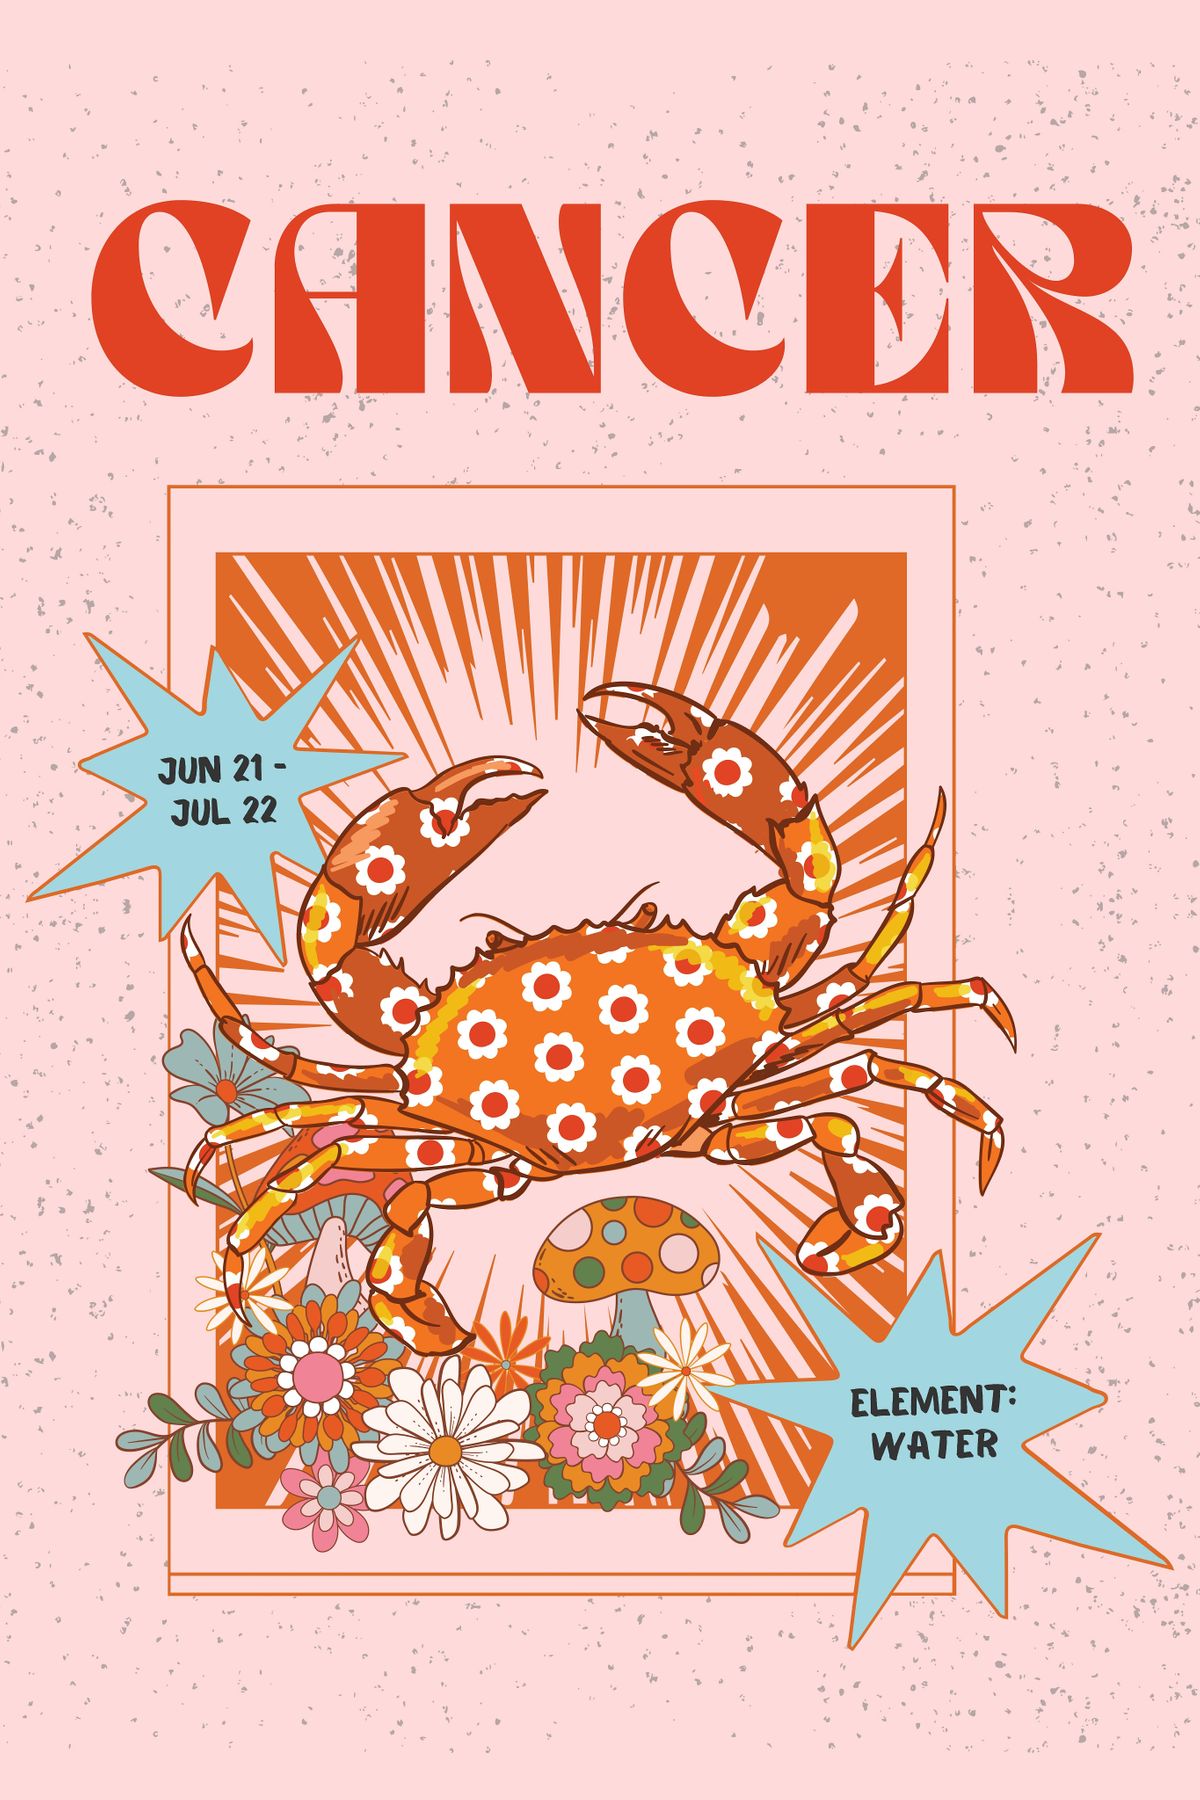 Monthly Astrology Dinner - Cancer